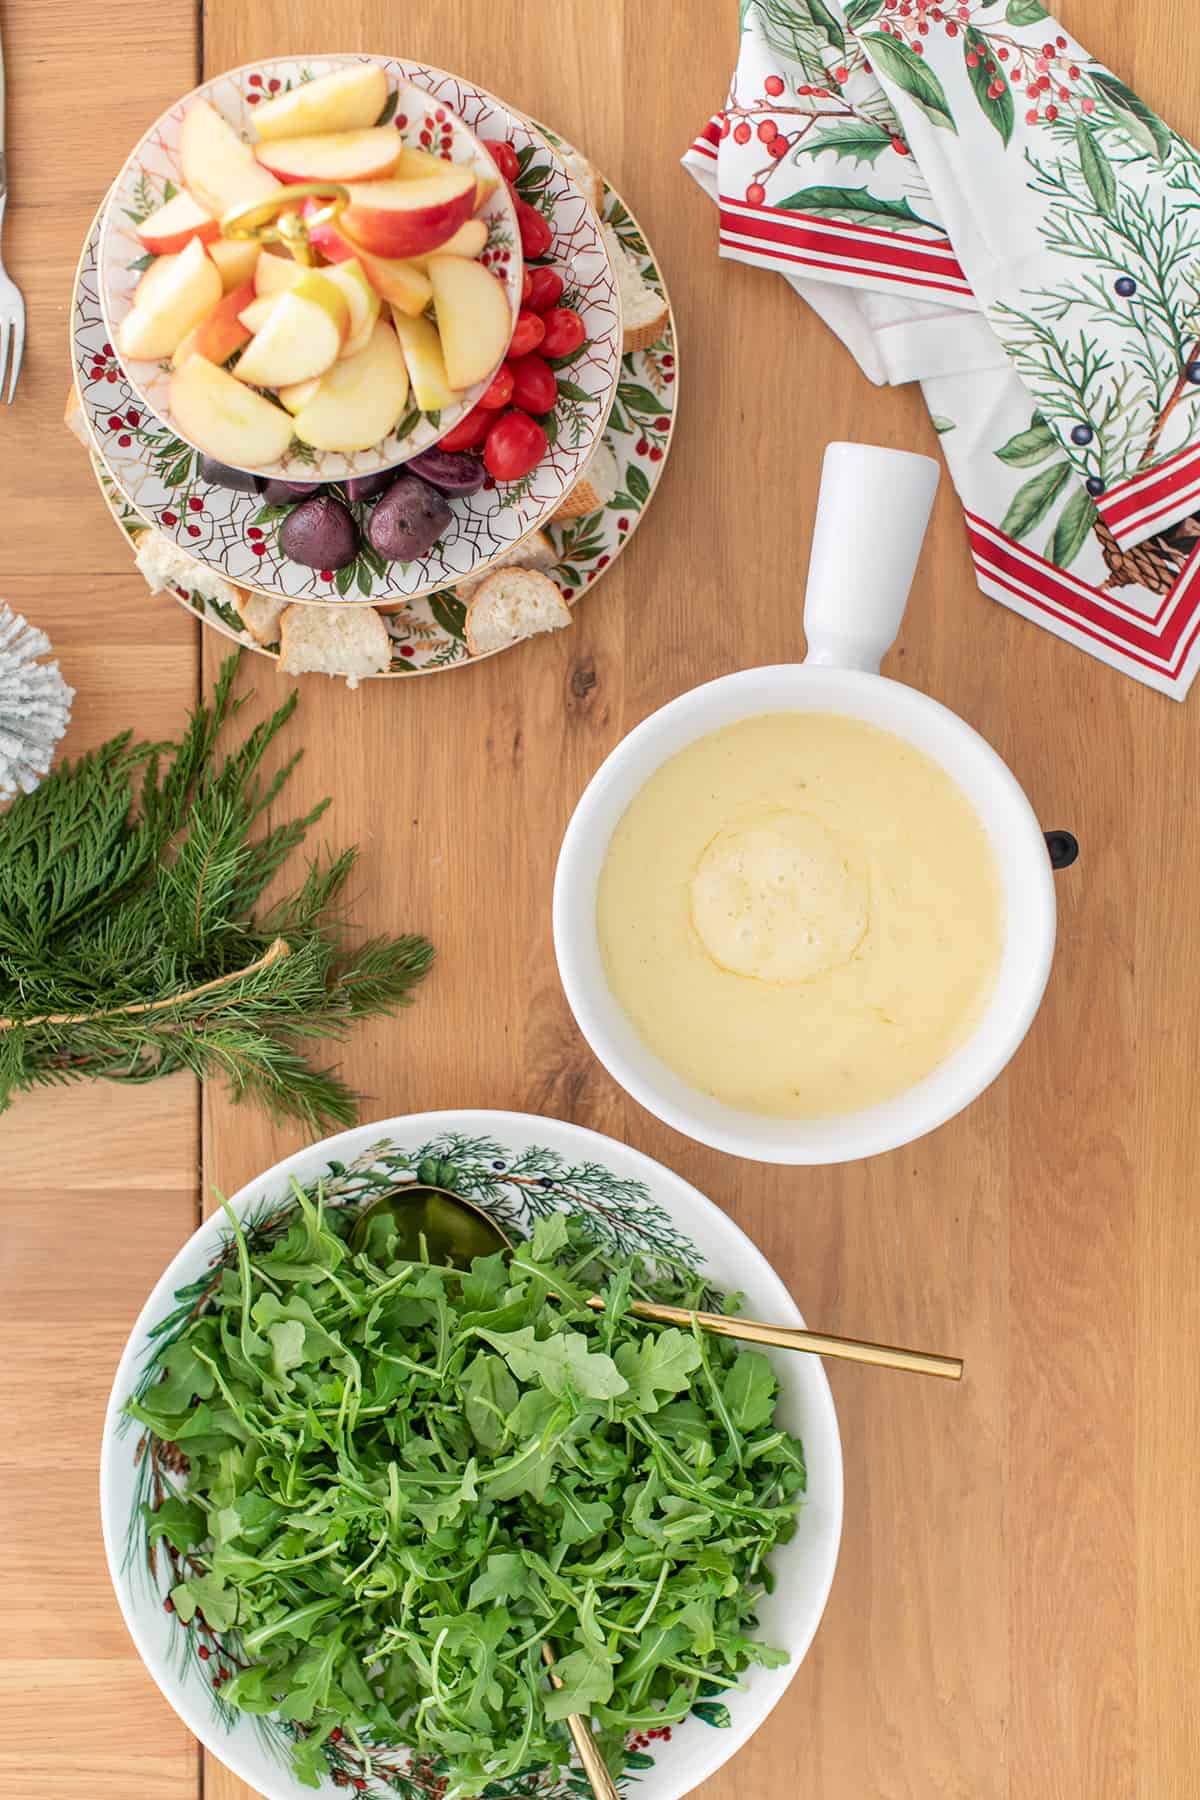 Cheese fondue and salad.